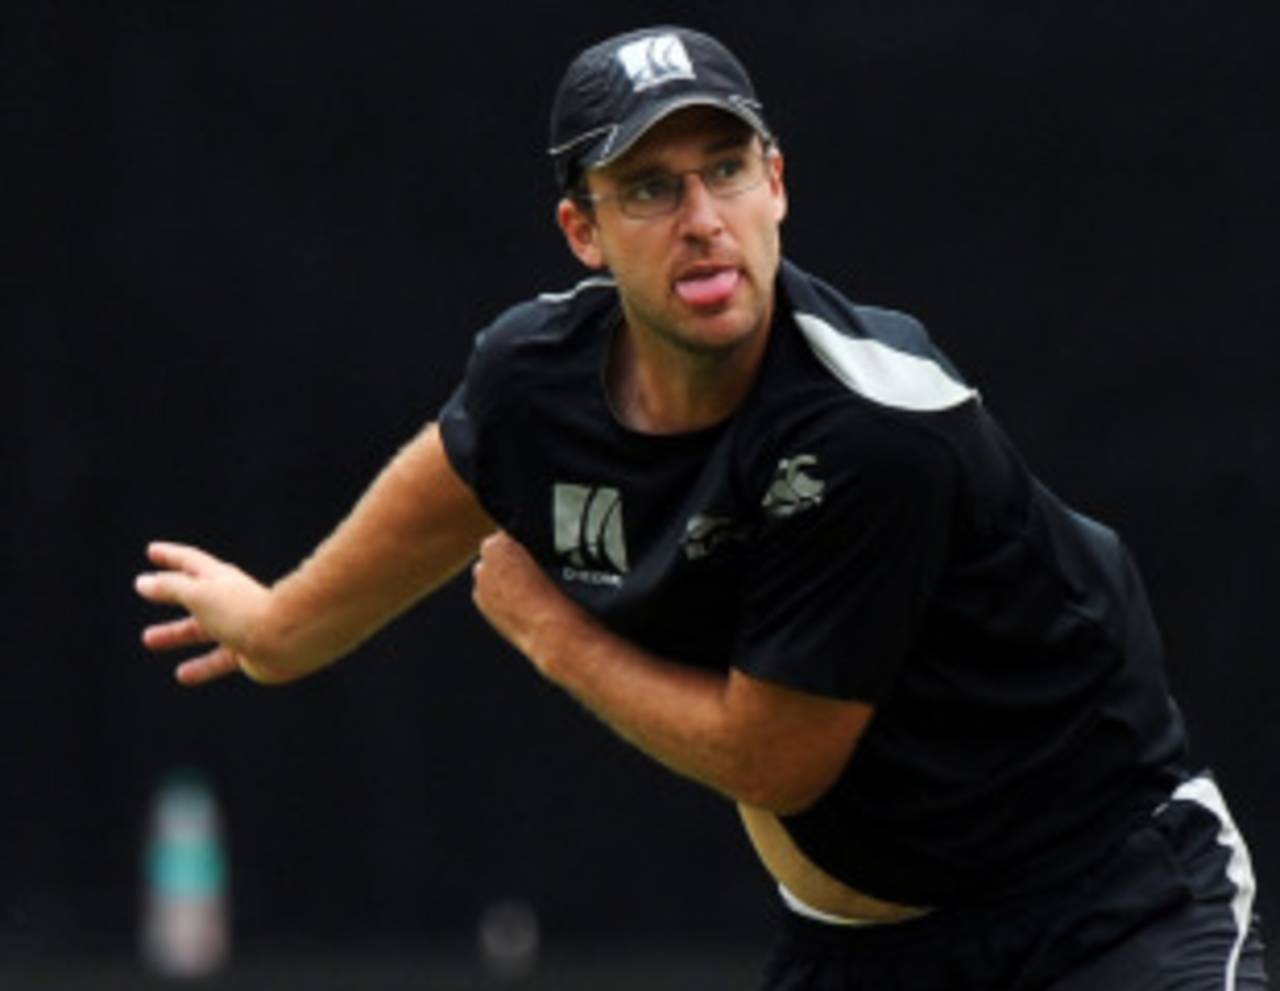 Daniel Vettori bowls during training ahead of New Zealand's fourth ODI against India, Bangalore, December 6, 2010